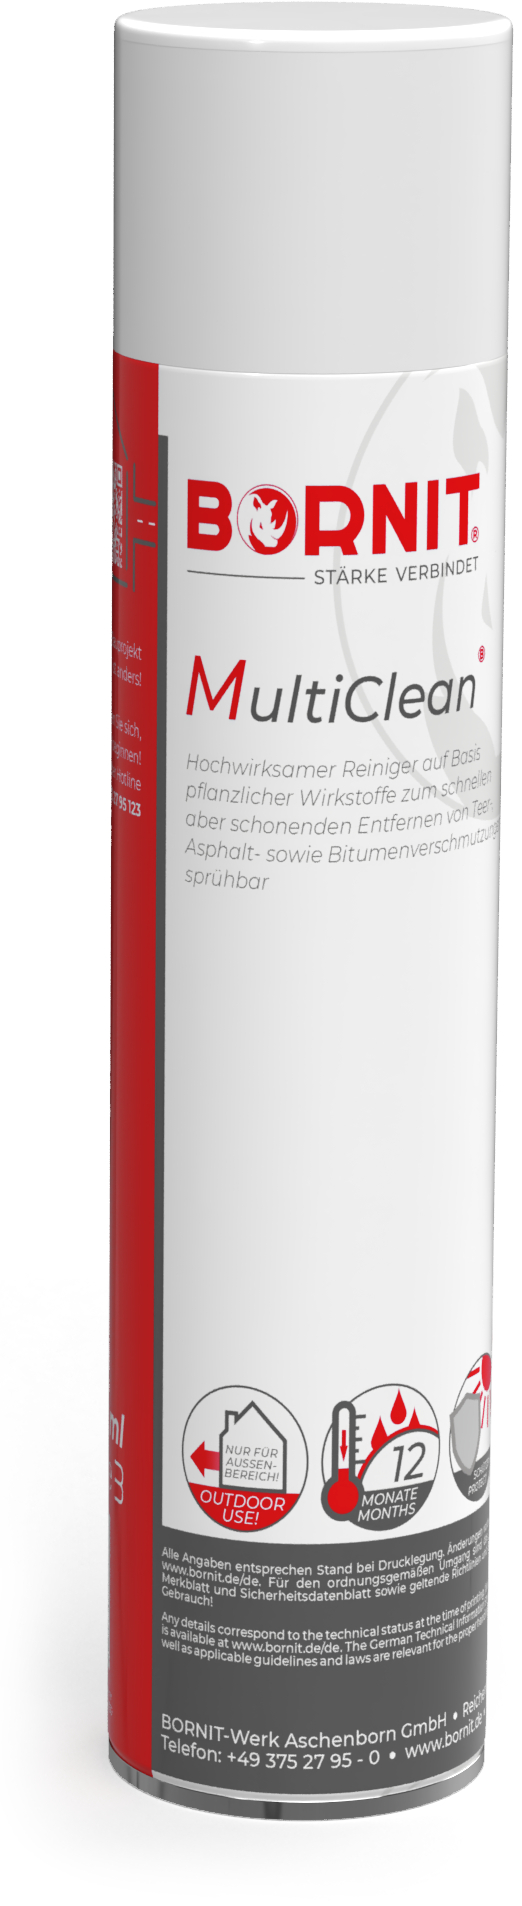 Bornit-MultiClean - 600 ml Spruehreiniger